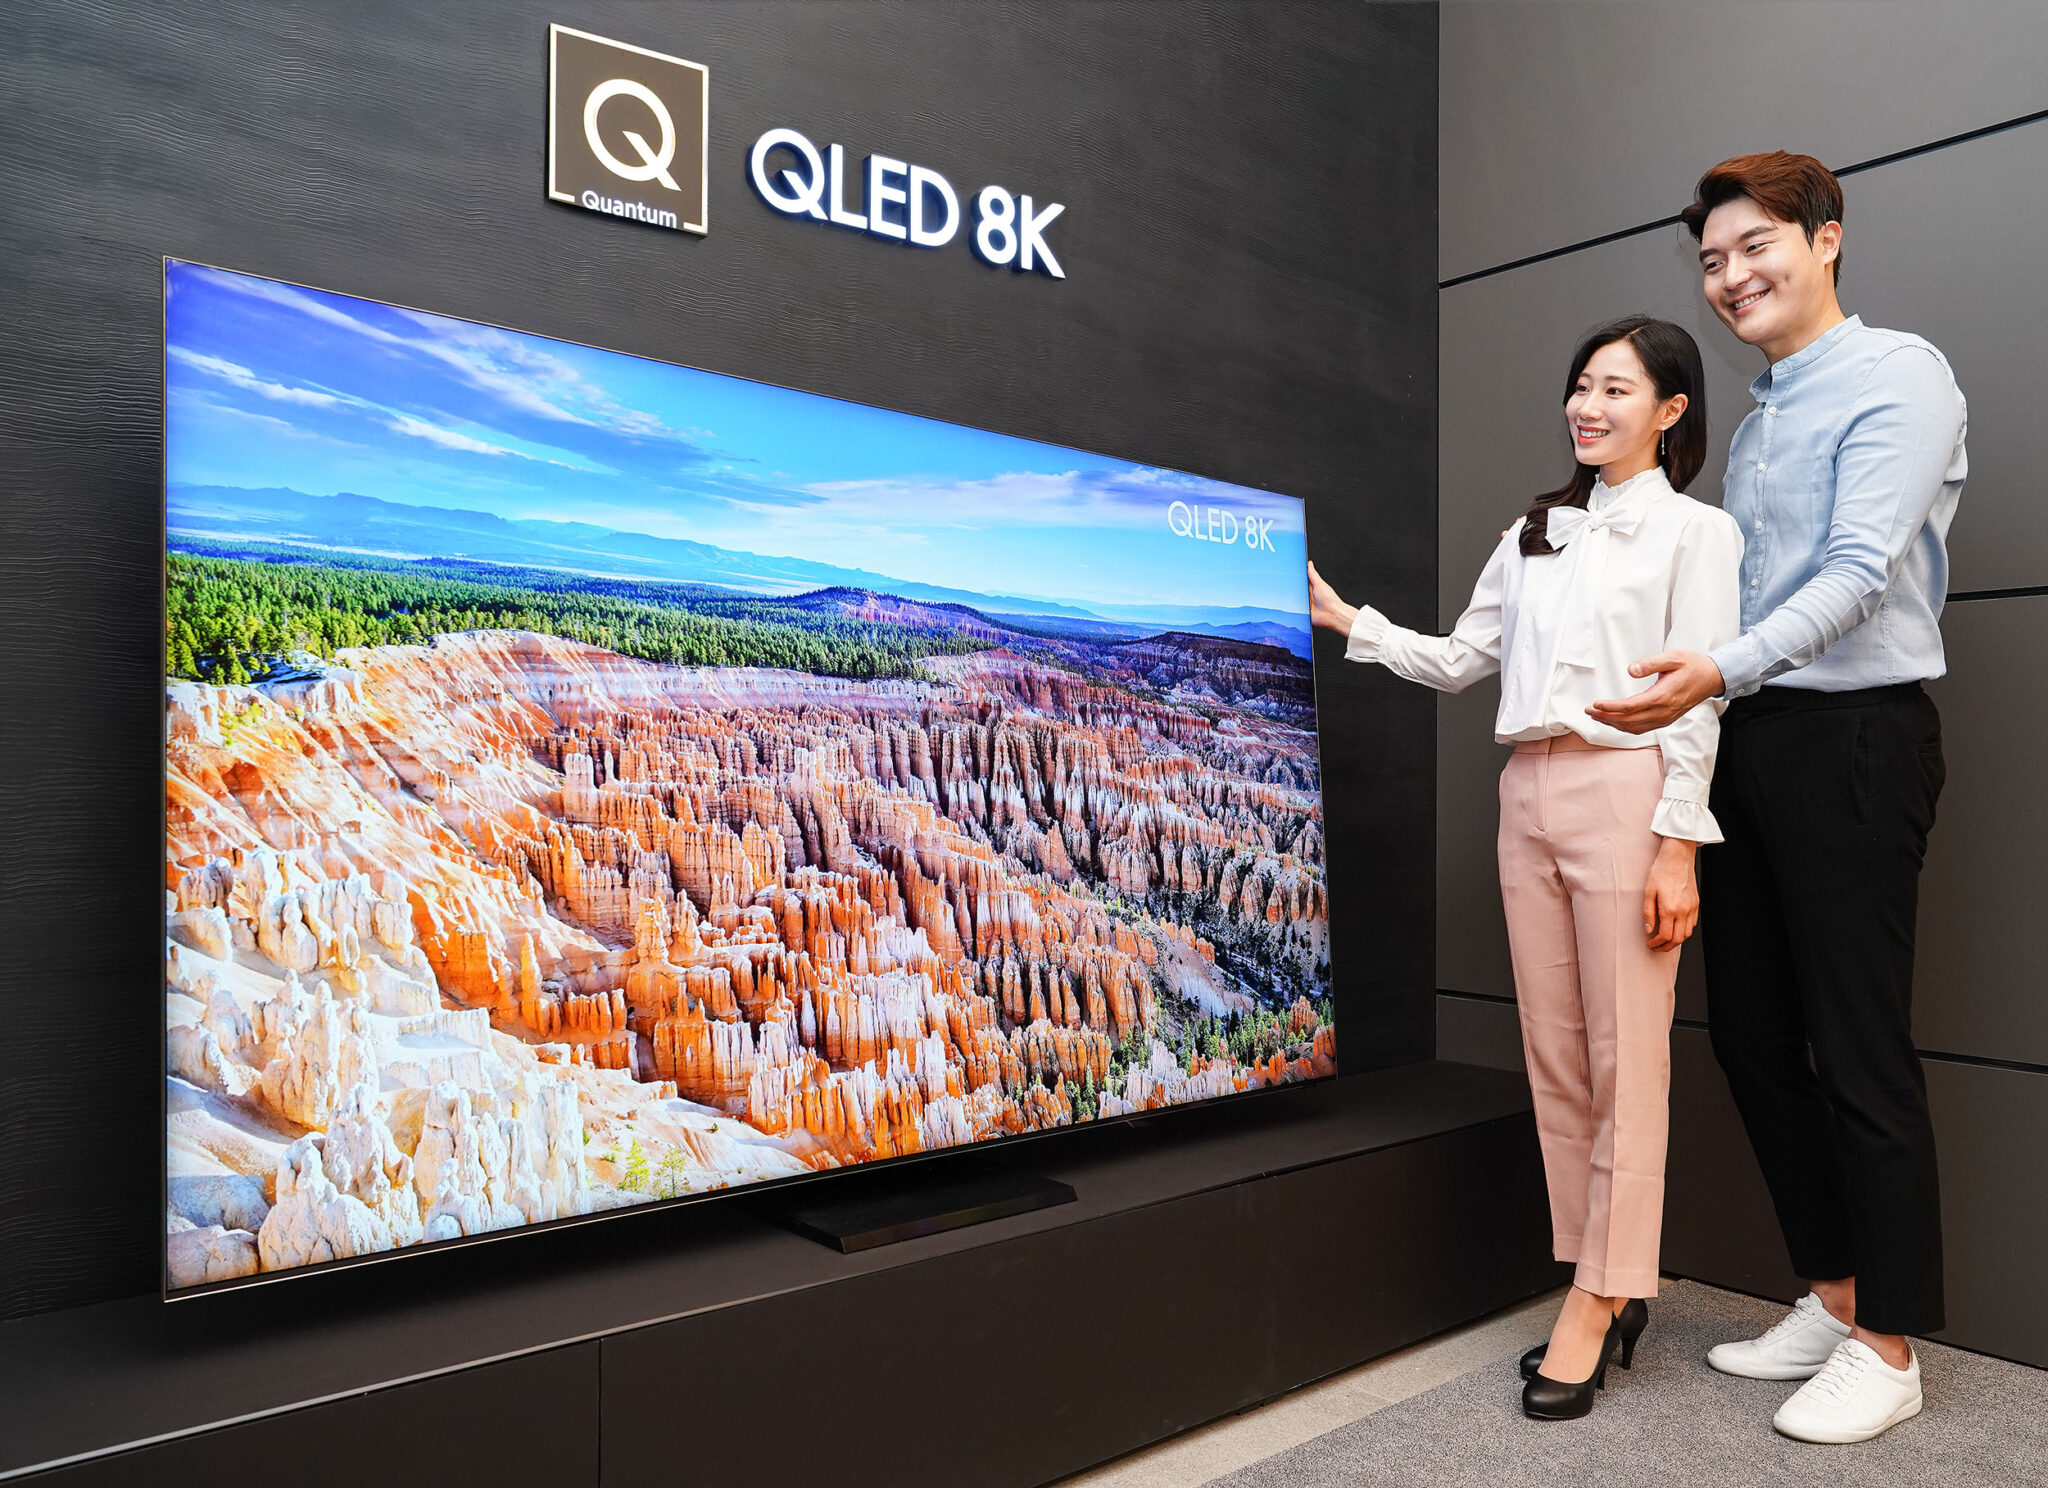 Телевизор самсунг qled купить. Телевизор Samsung QLED 8k. Телевизор самсунг QLED 8к. Телевизор Samsung QLED 8k 2020. Samsung QLED 8k 85 дюймов.